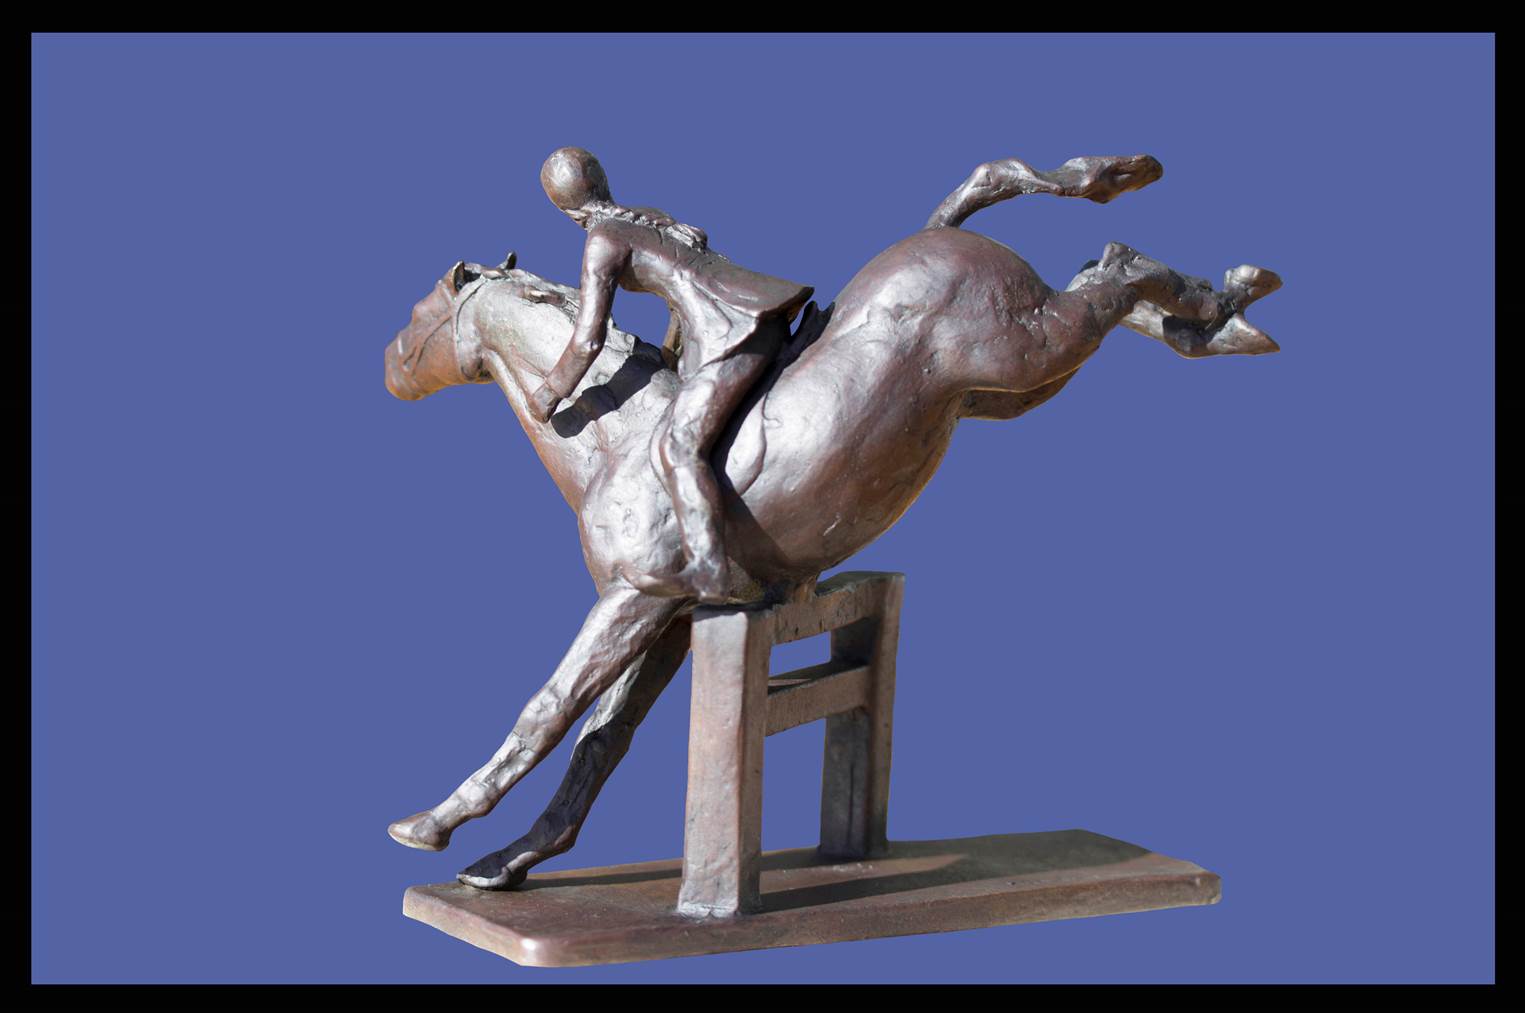 A bronze statue of a jockey on horseback.